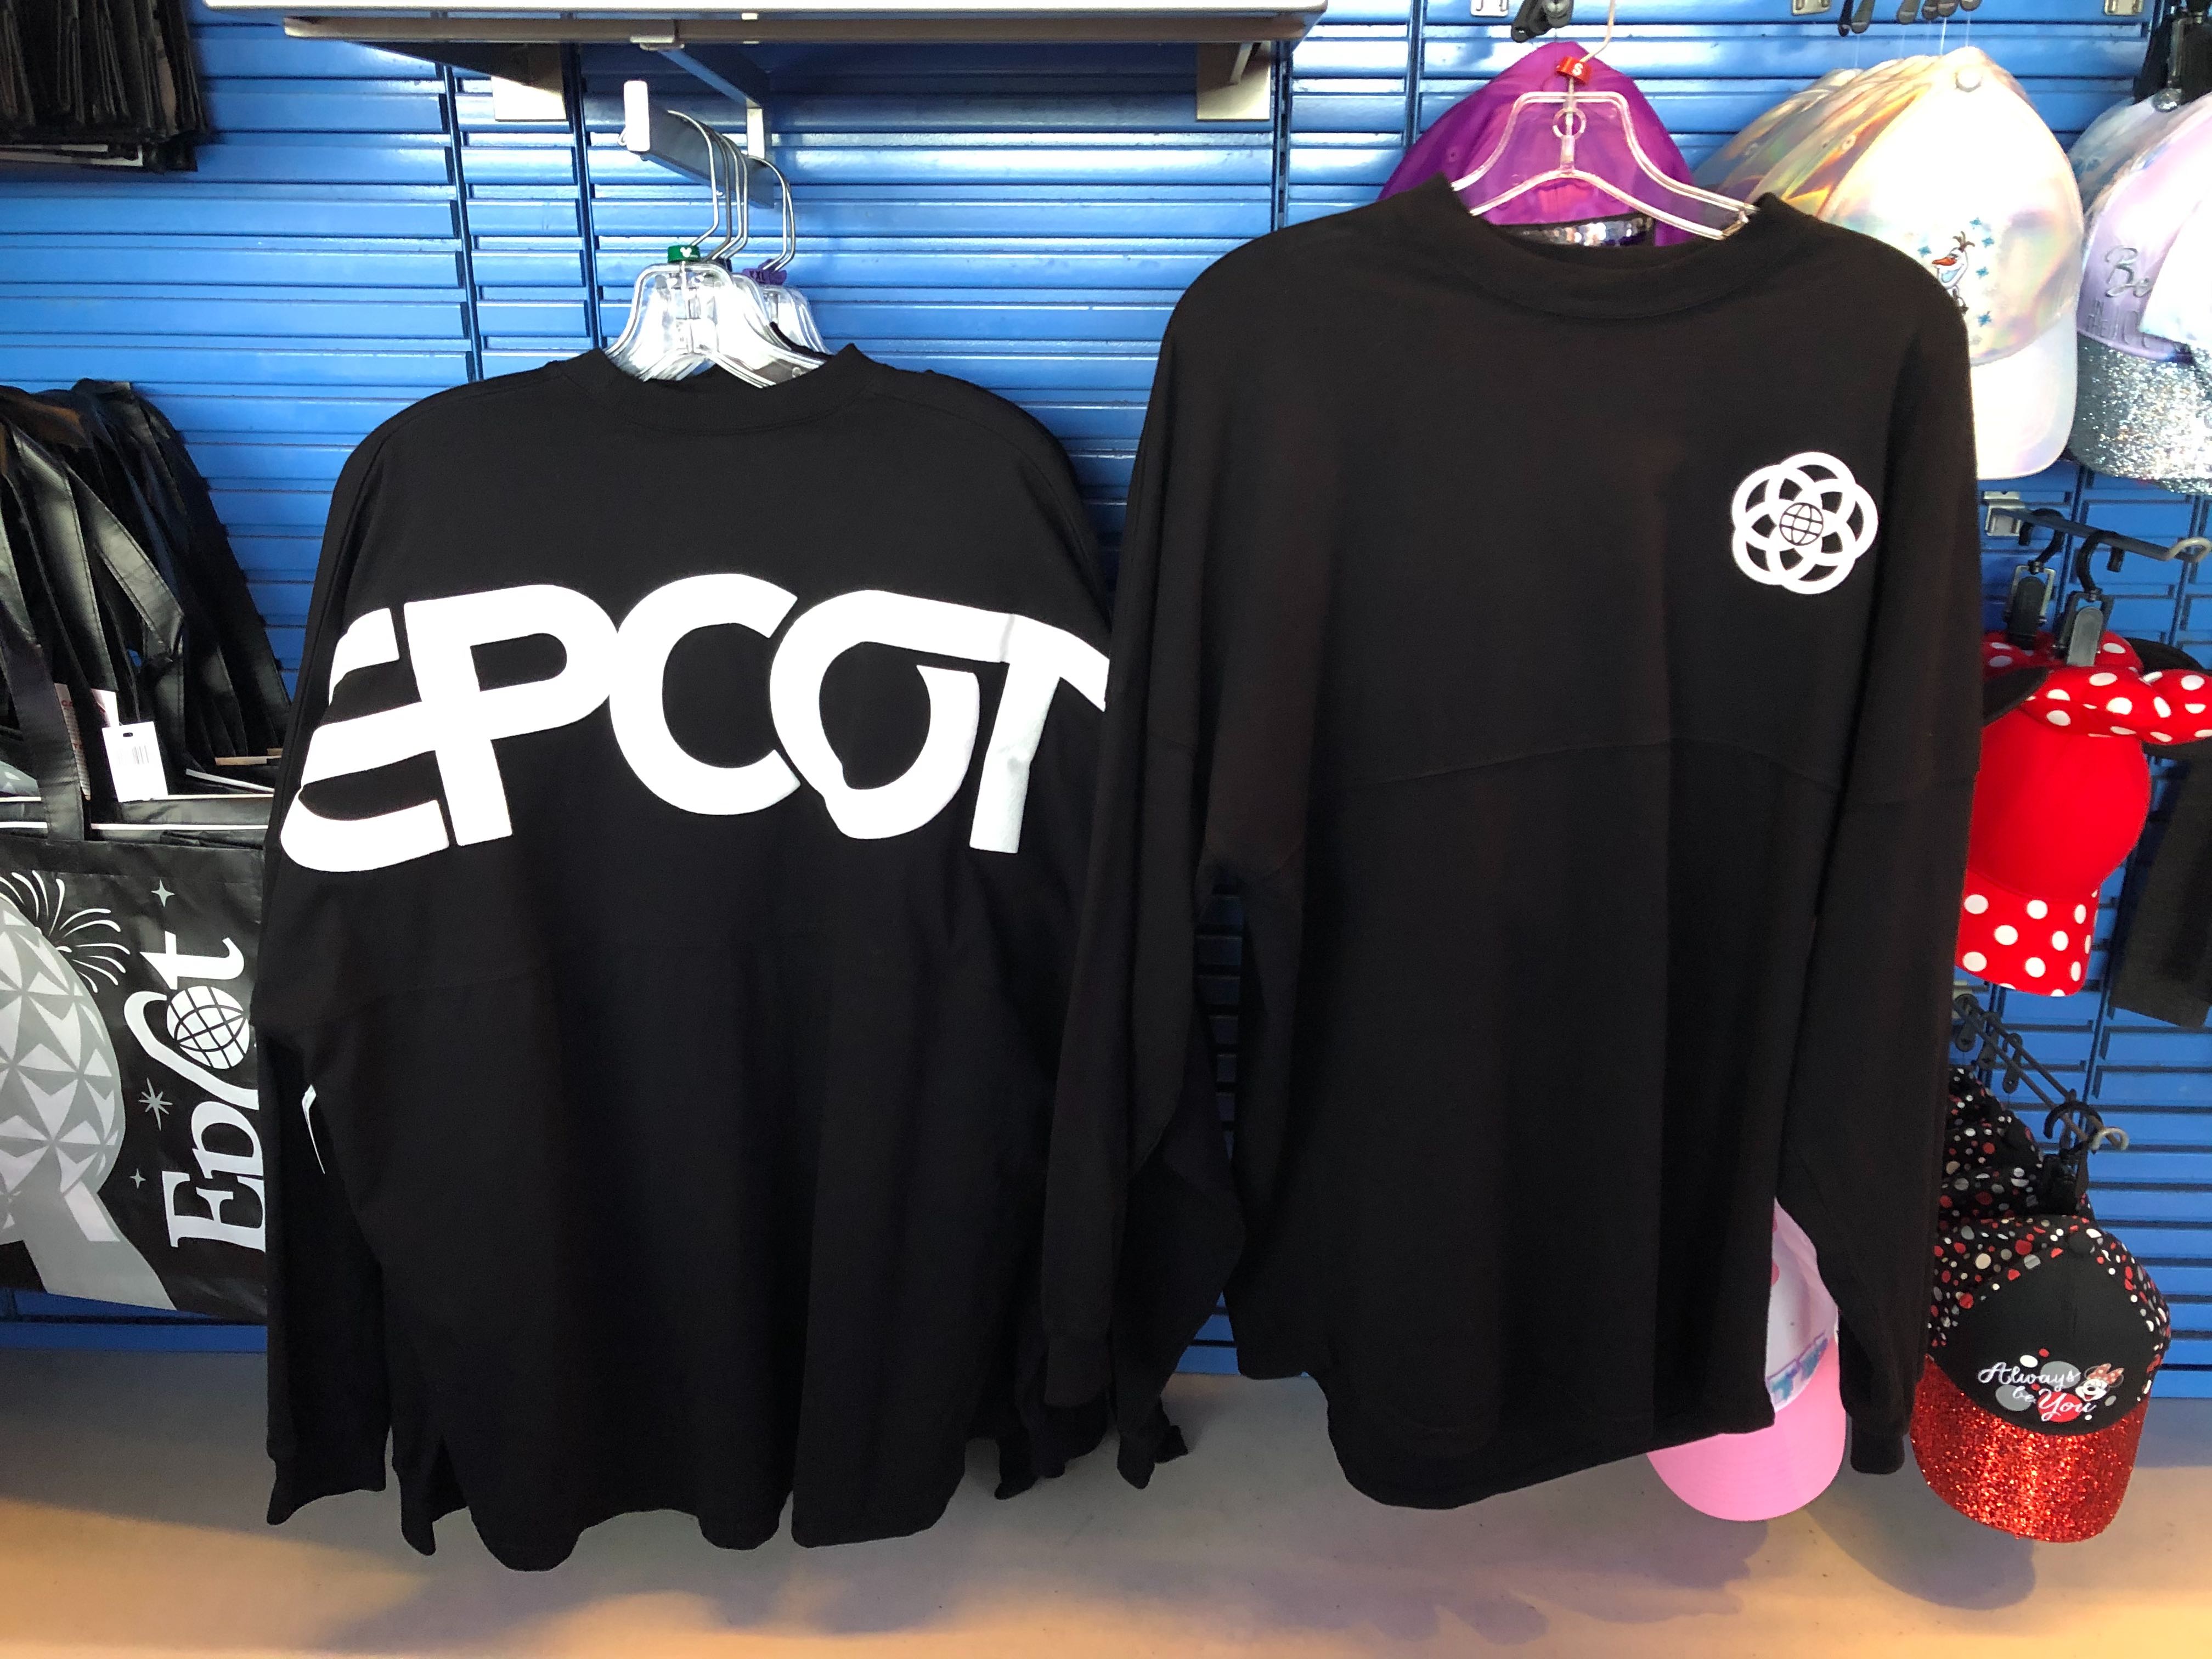 PHOTOS: New EPCOT Logo Spirit Jersey 